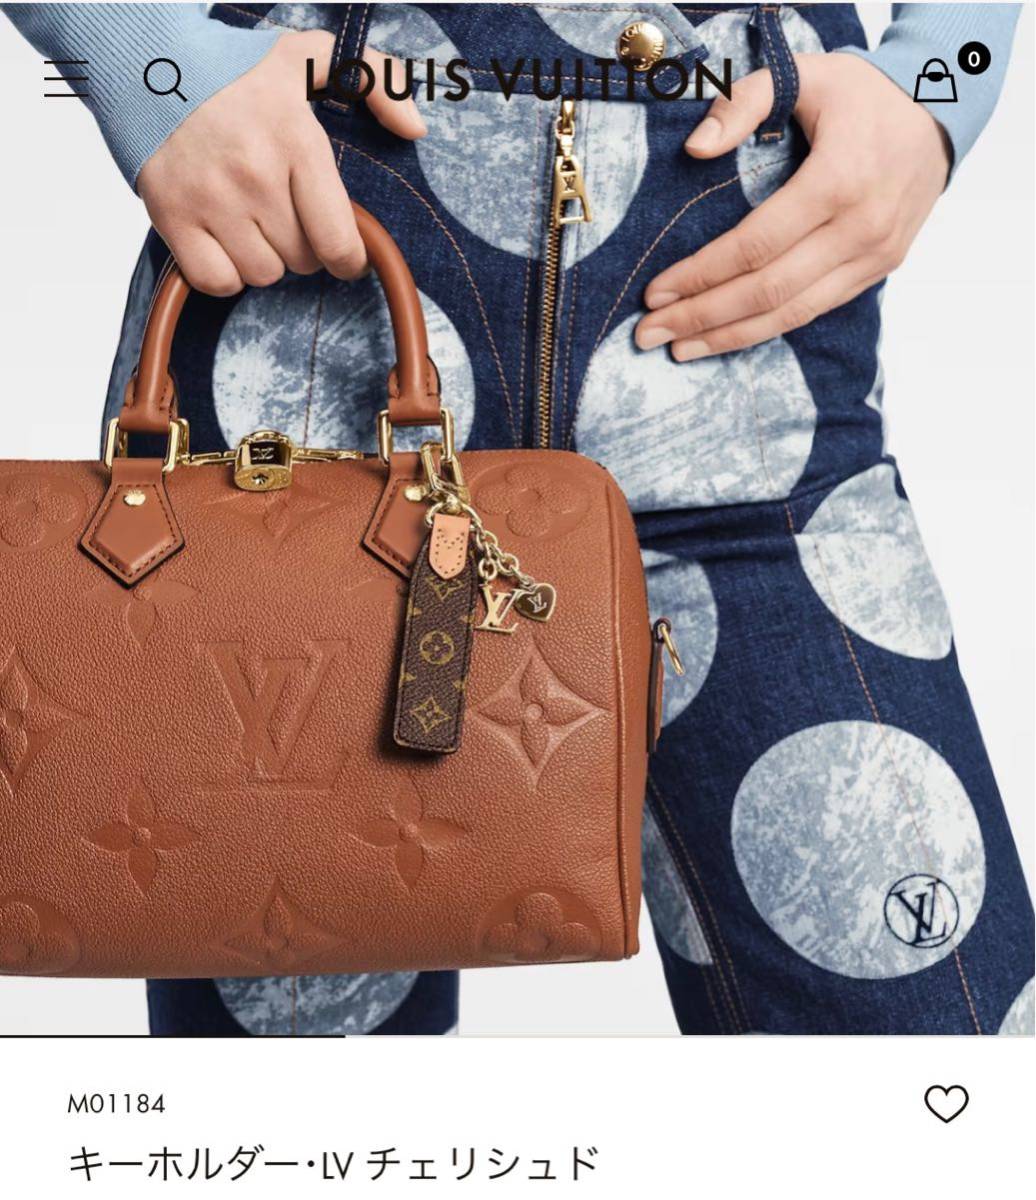  Louis Vuitton key holder LV unused goods charm che lishudo